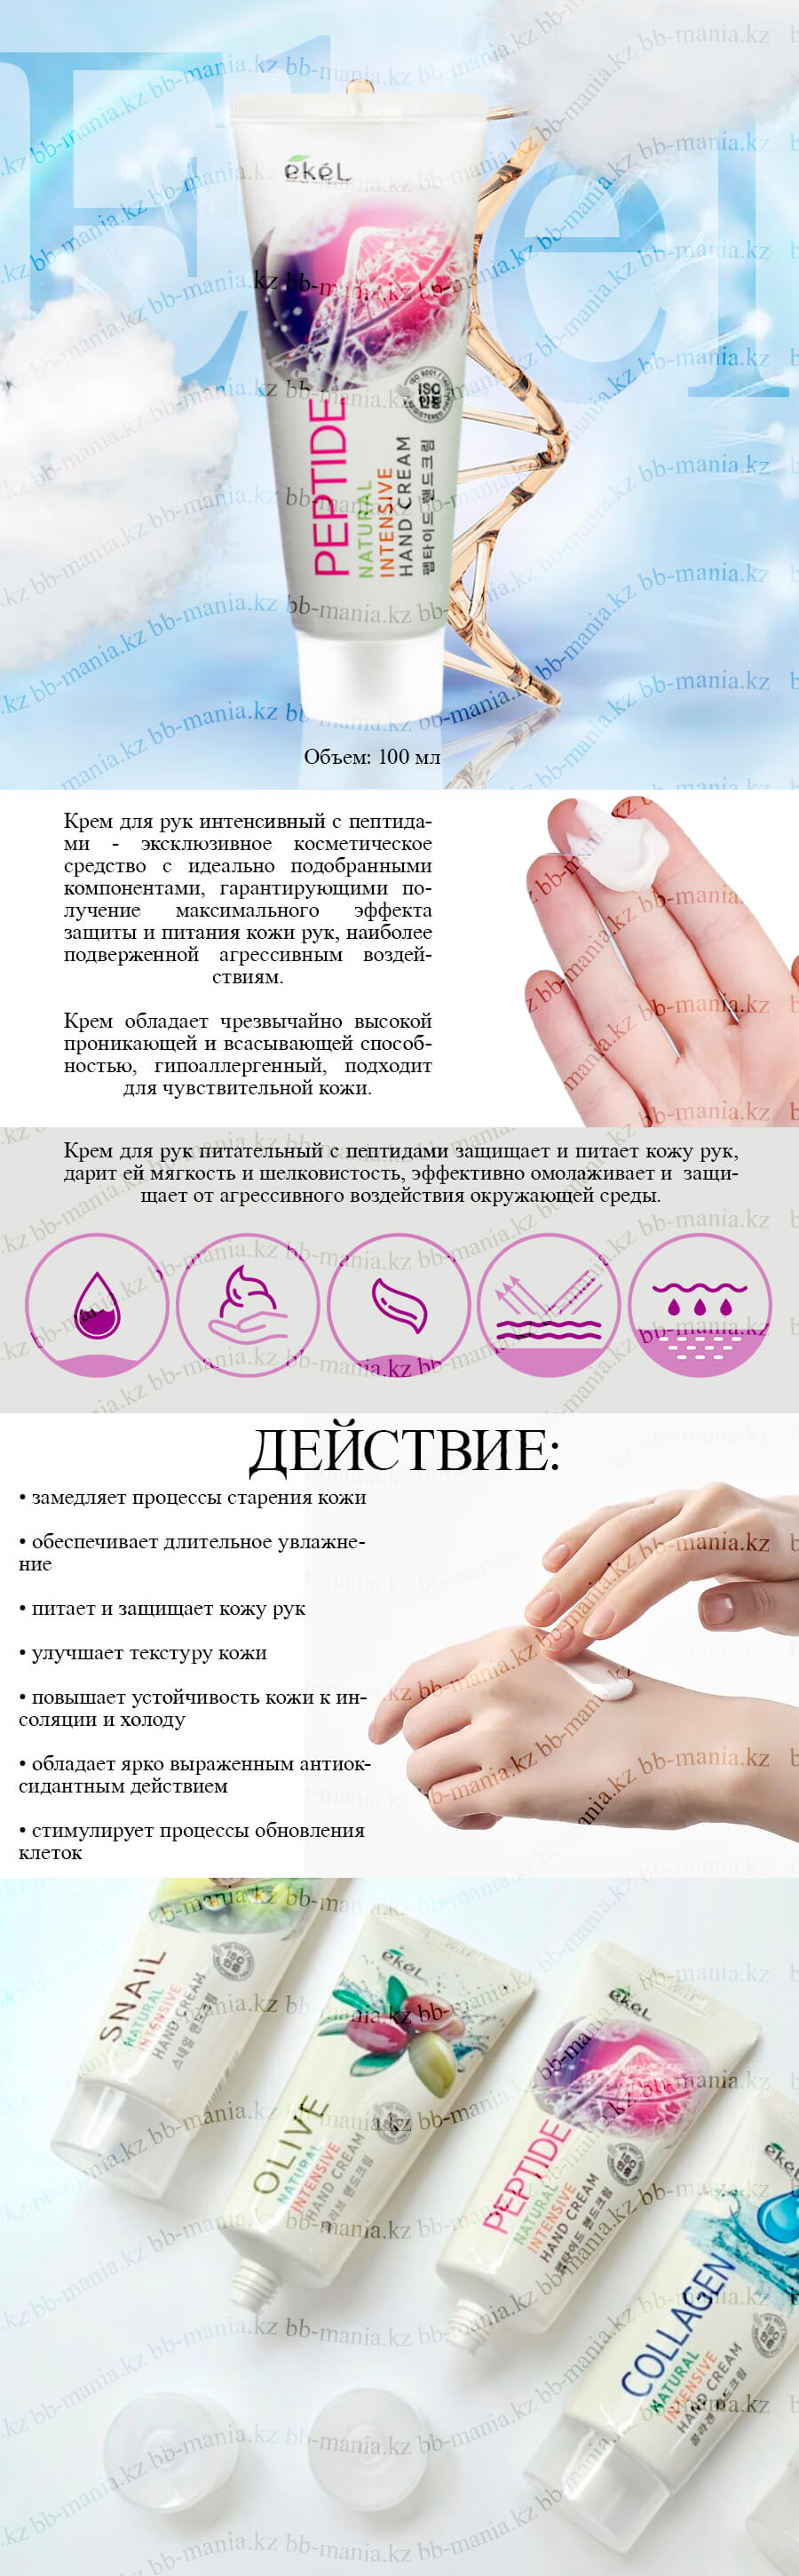 Peptide Natural Intensive Hand Cream [Ekel]